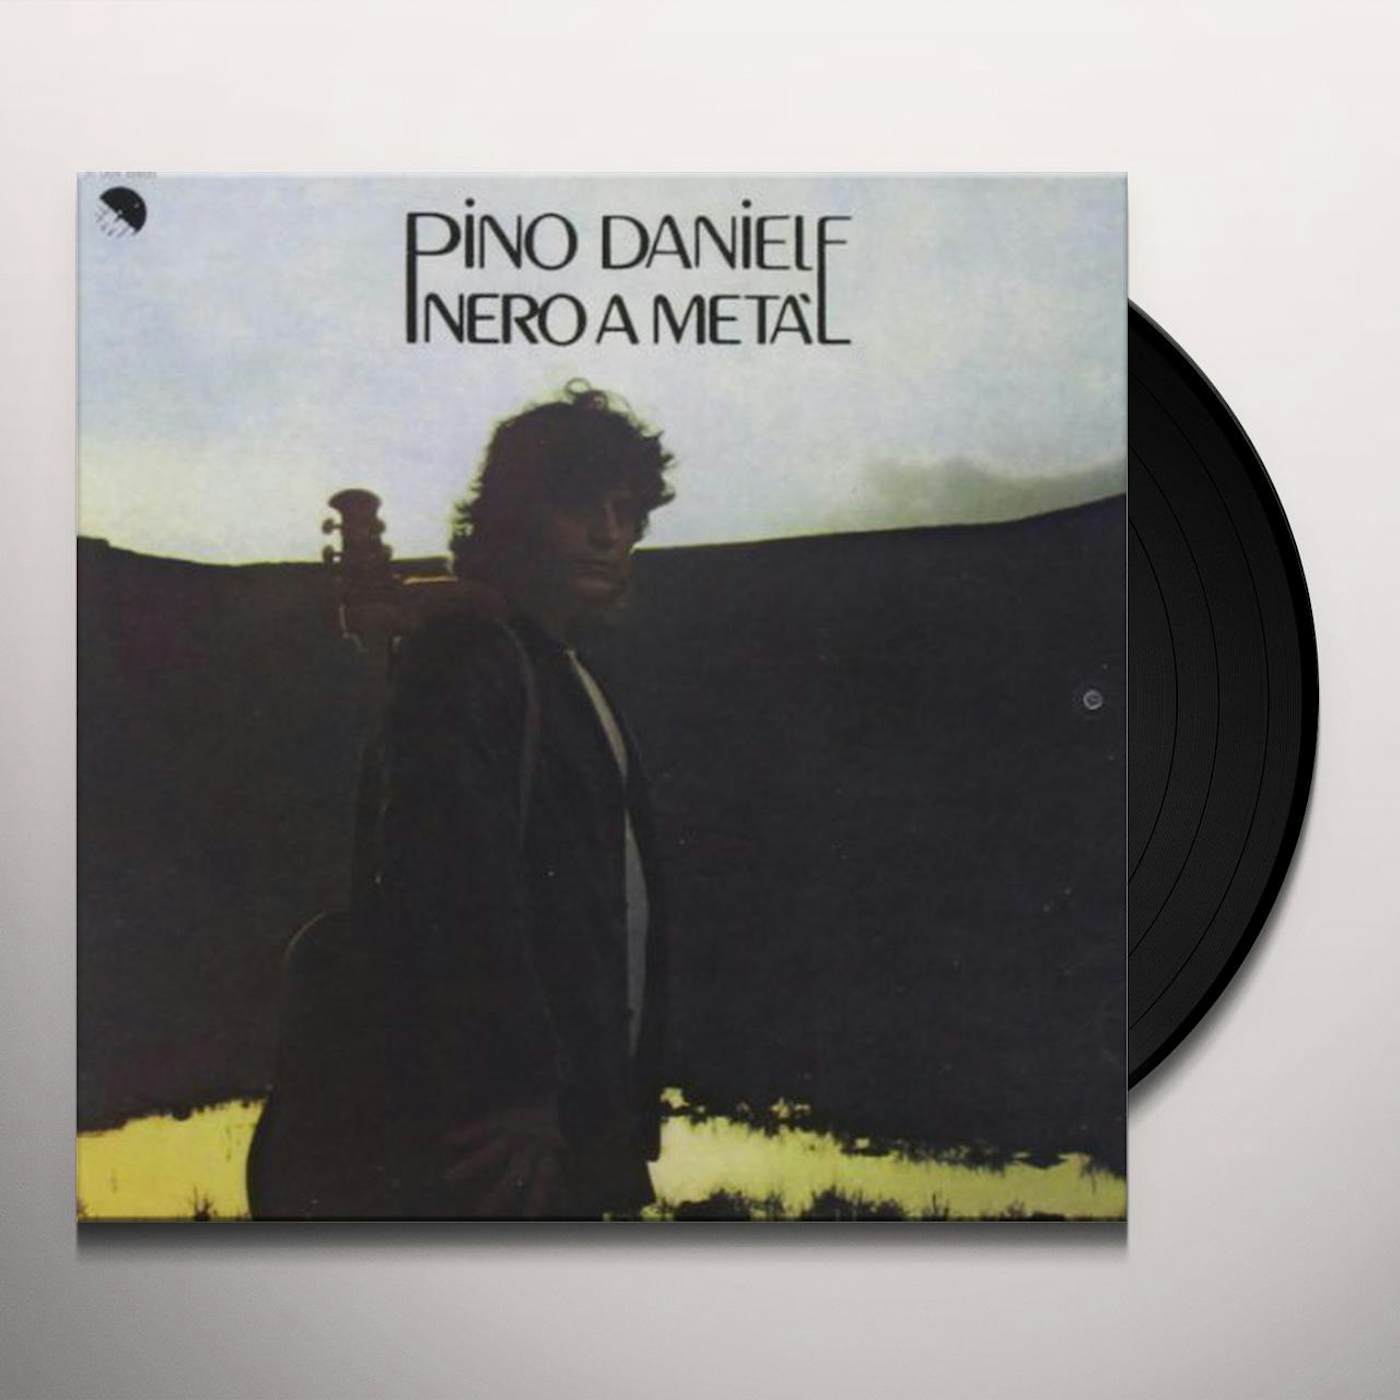 Pino Daniele NERO A META Vinyl Record